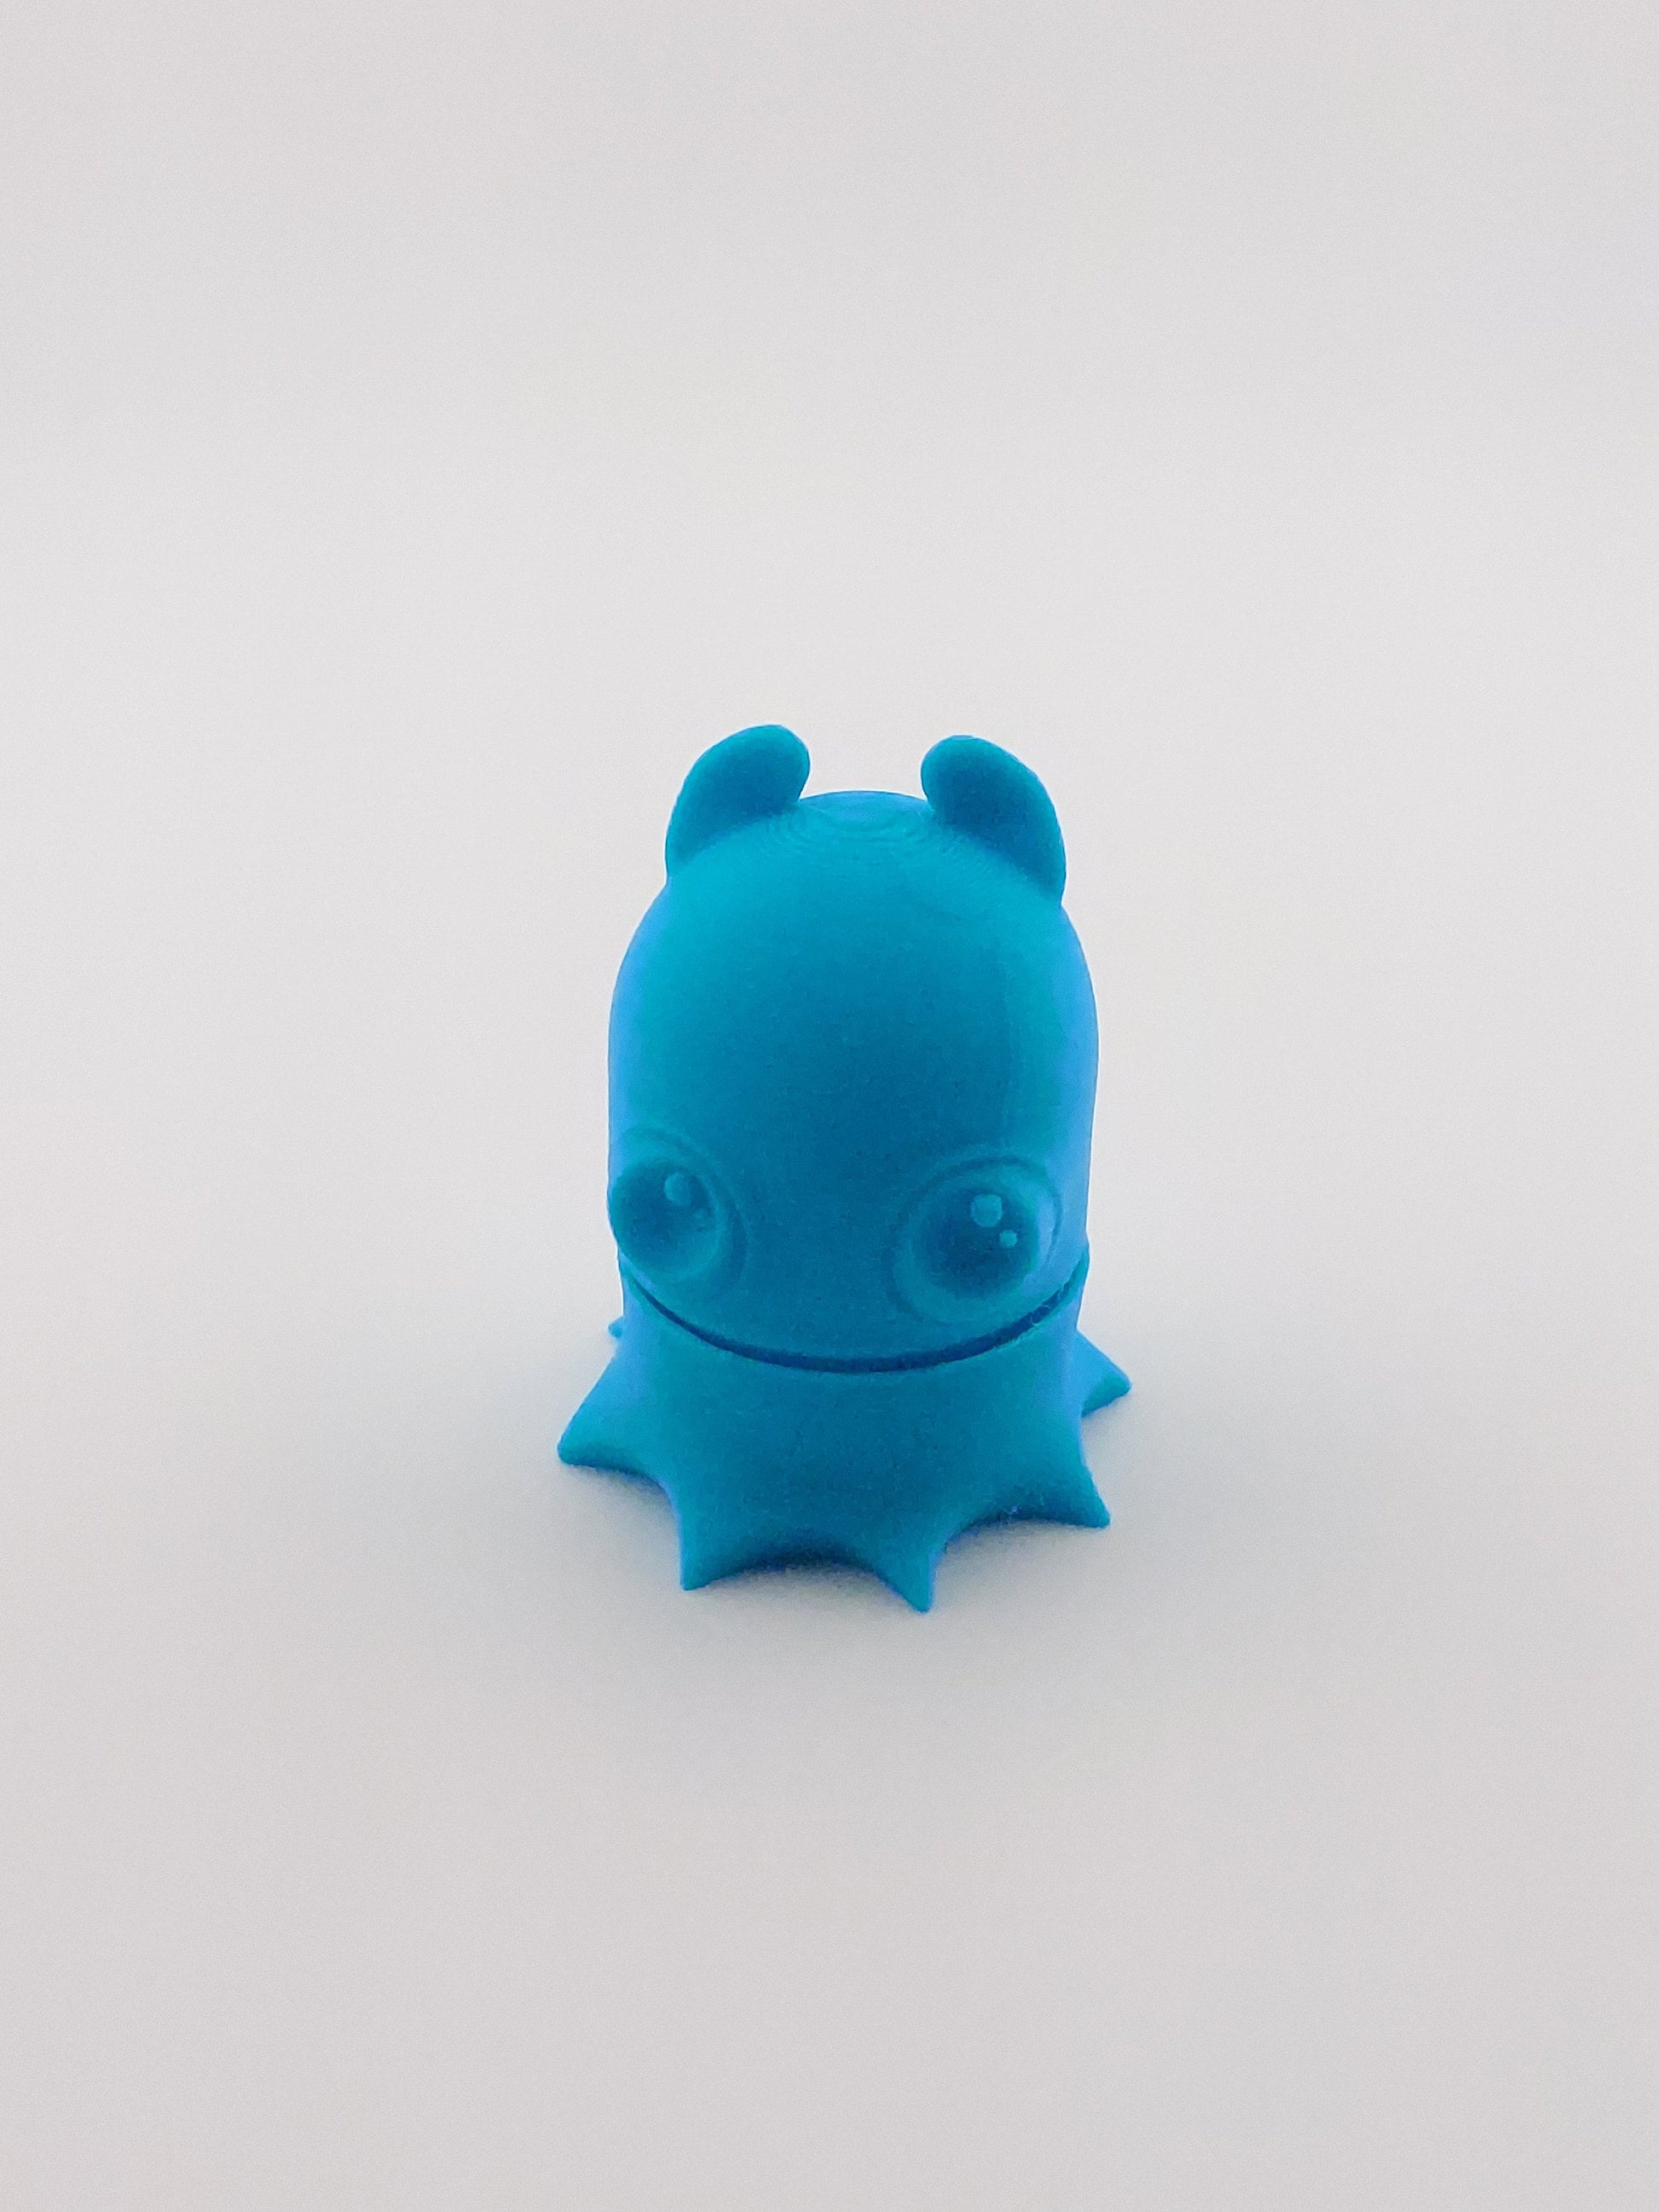 1 Articulated Fidget Alien -- Decor Gift - 3D Printed Fidget Fantasy Creature - Customizable Colors - Authorized Seller